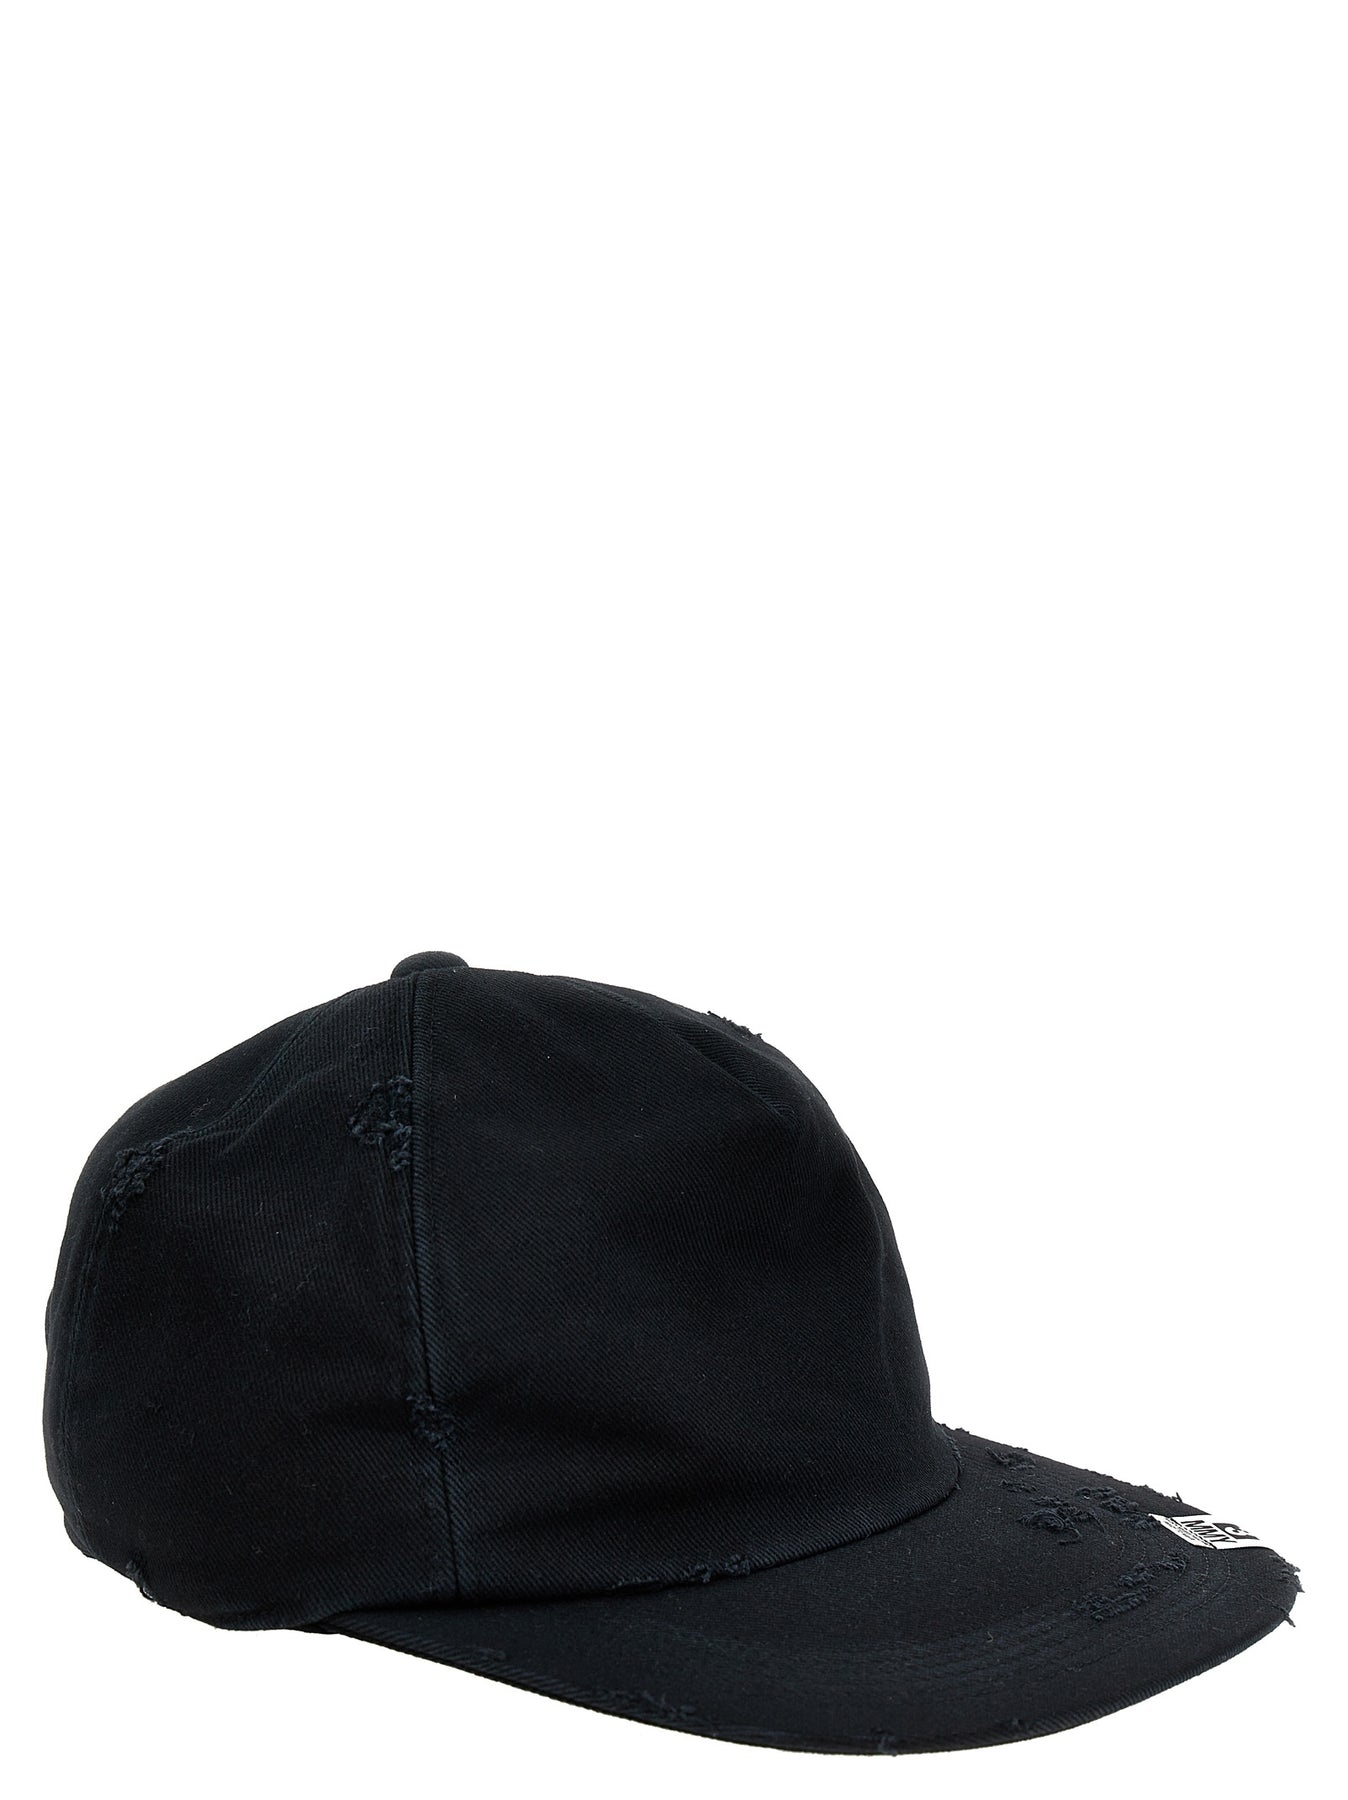 Used Effect Cap Hats Black - 2